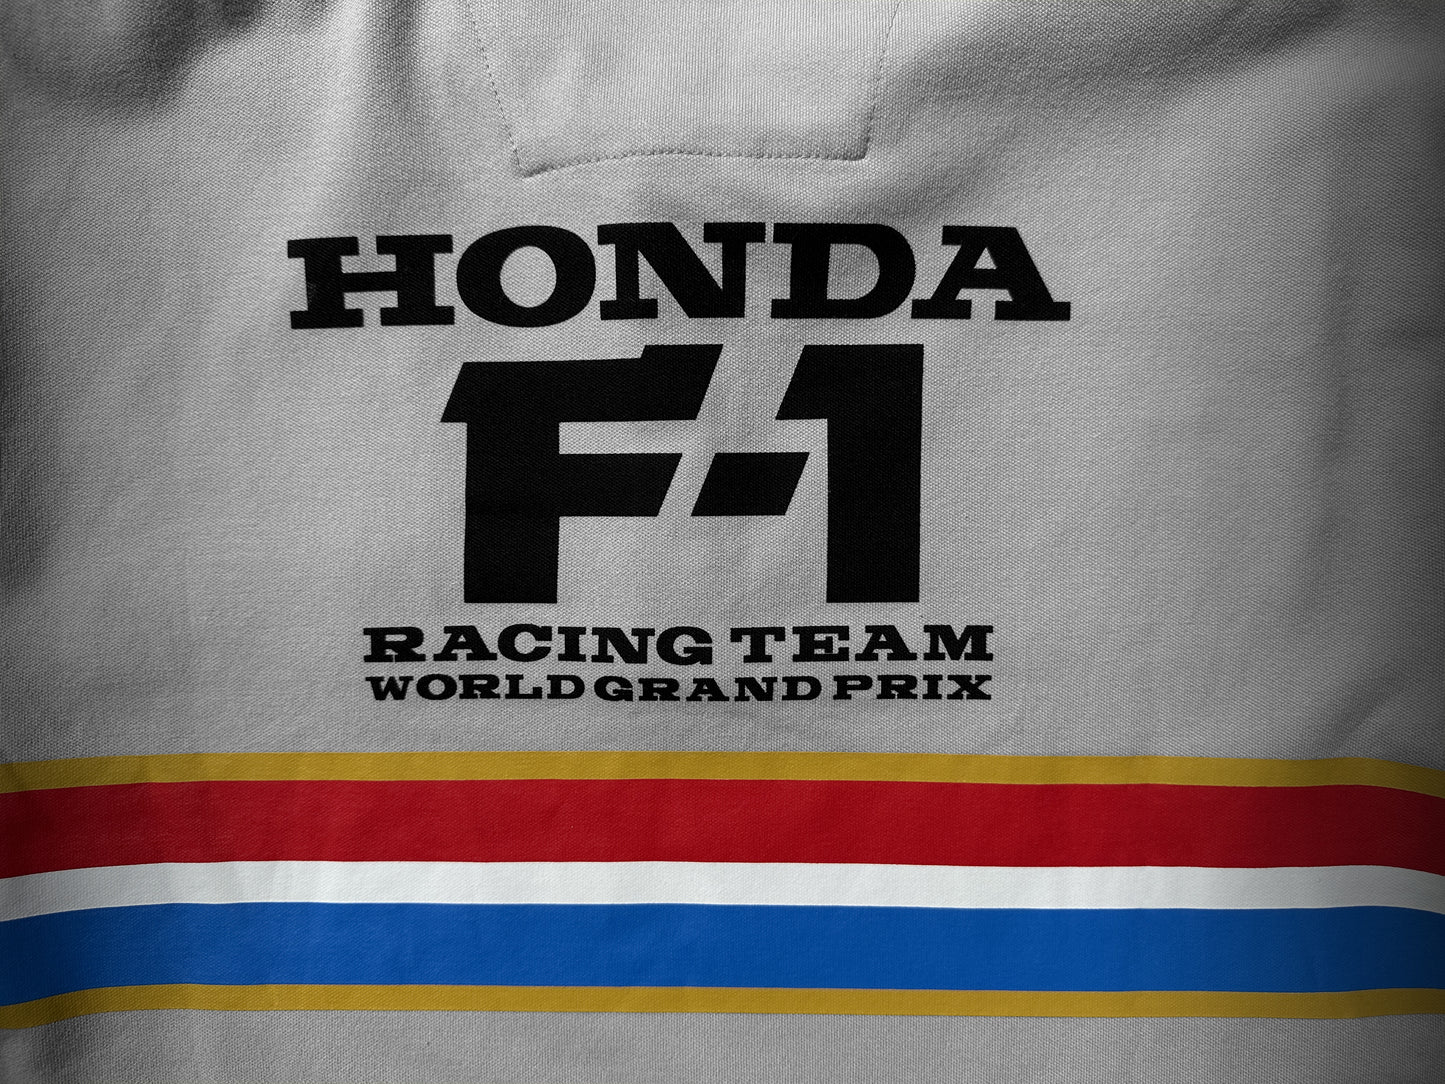 1986 Honda F1 Team Polo (gray)